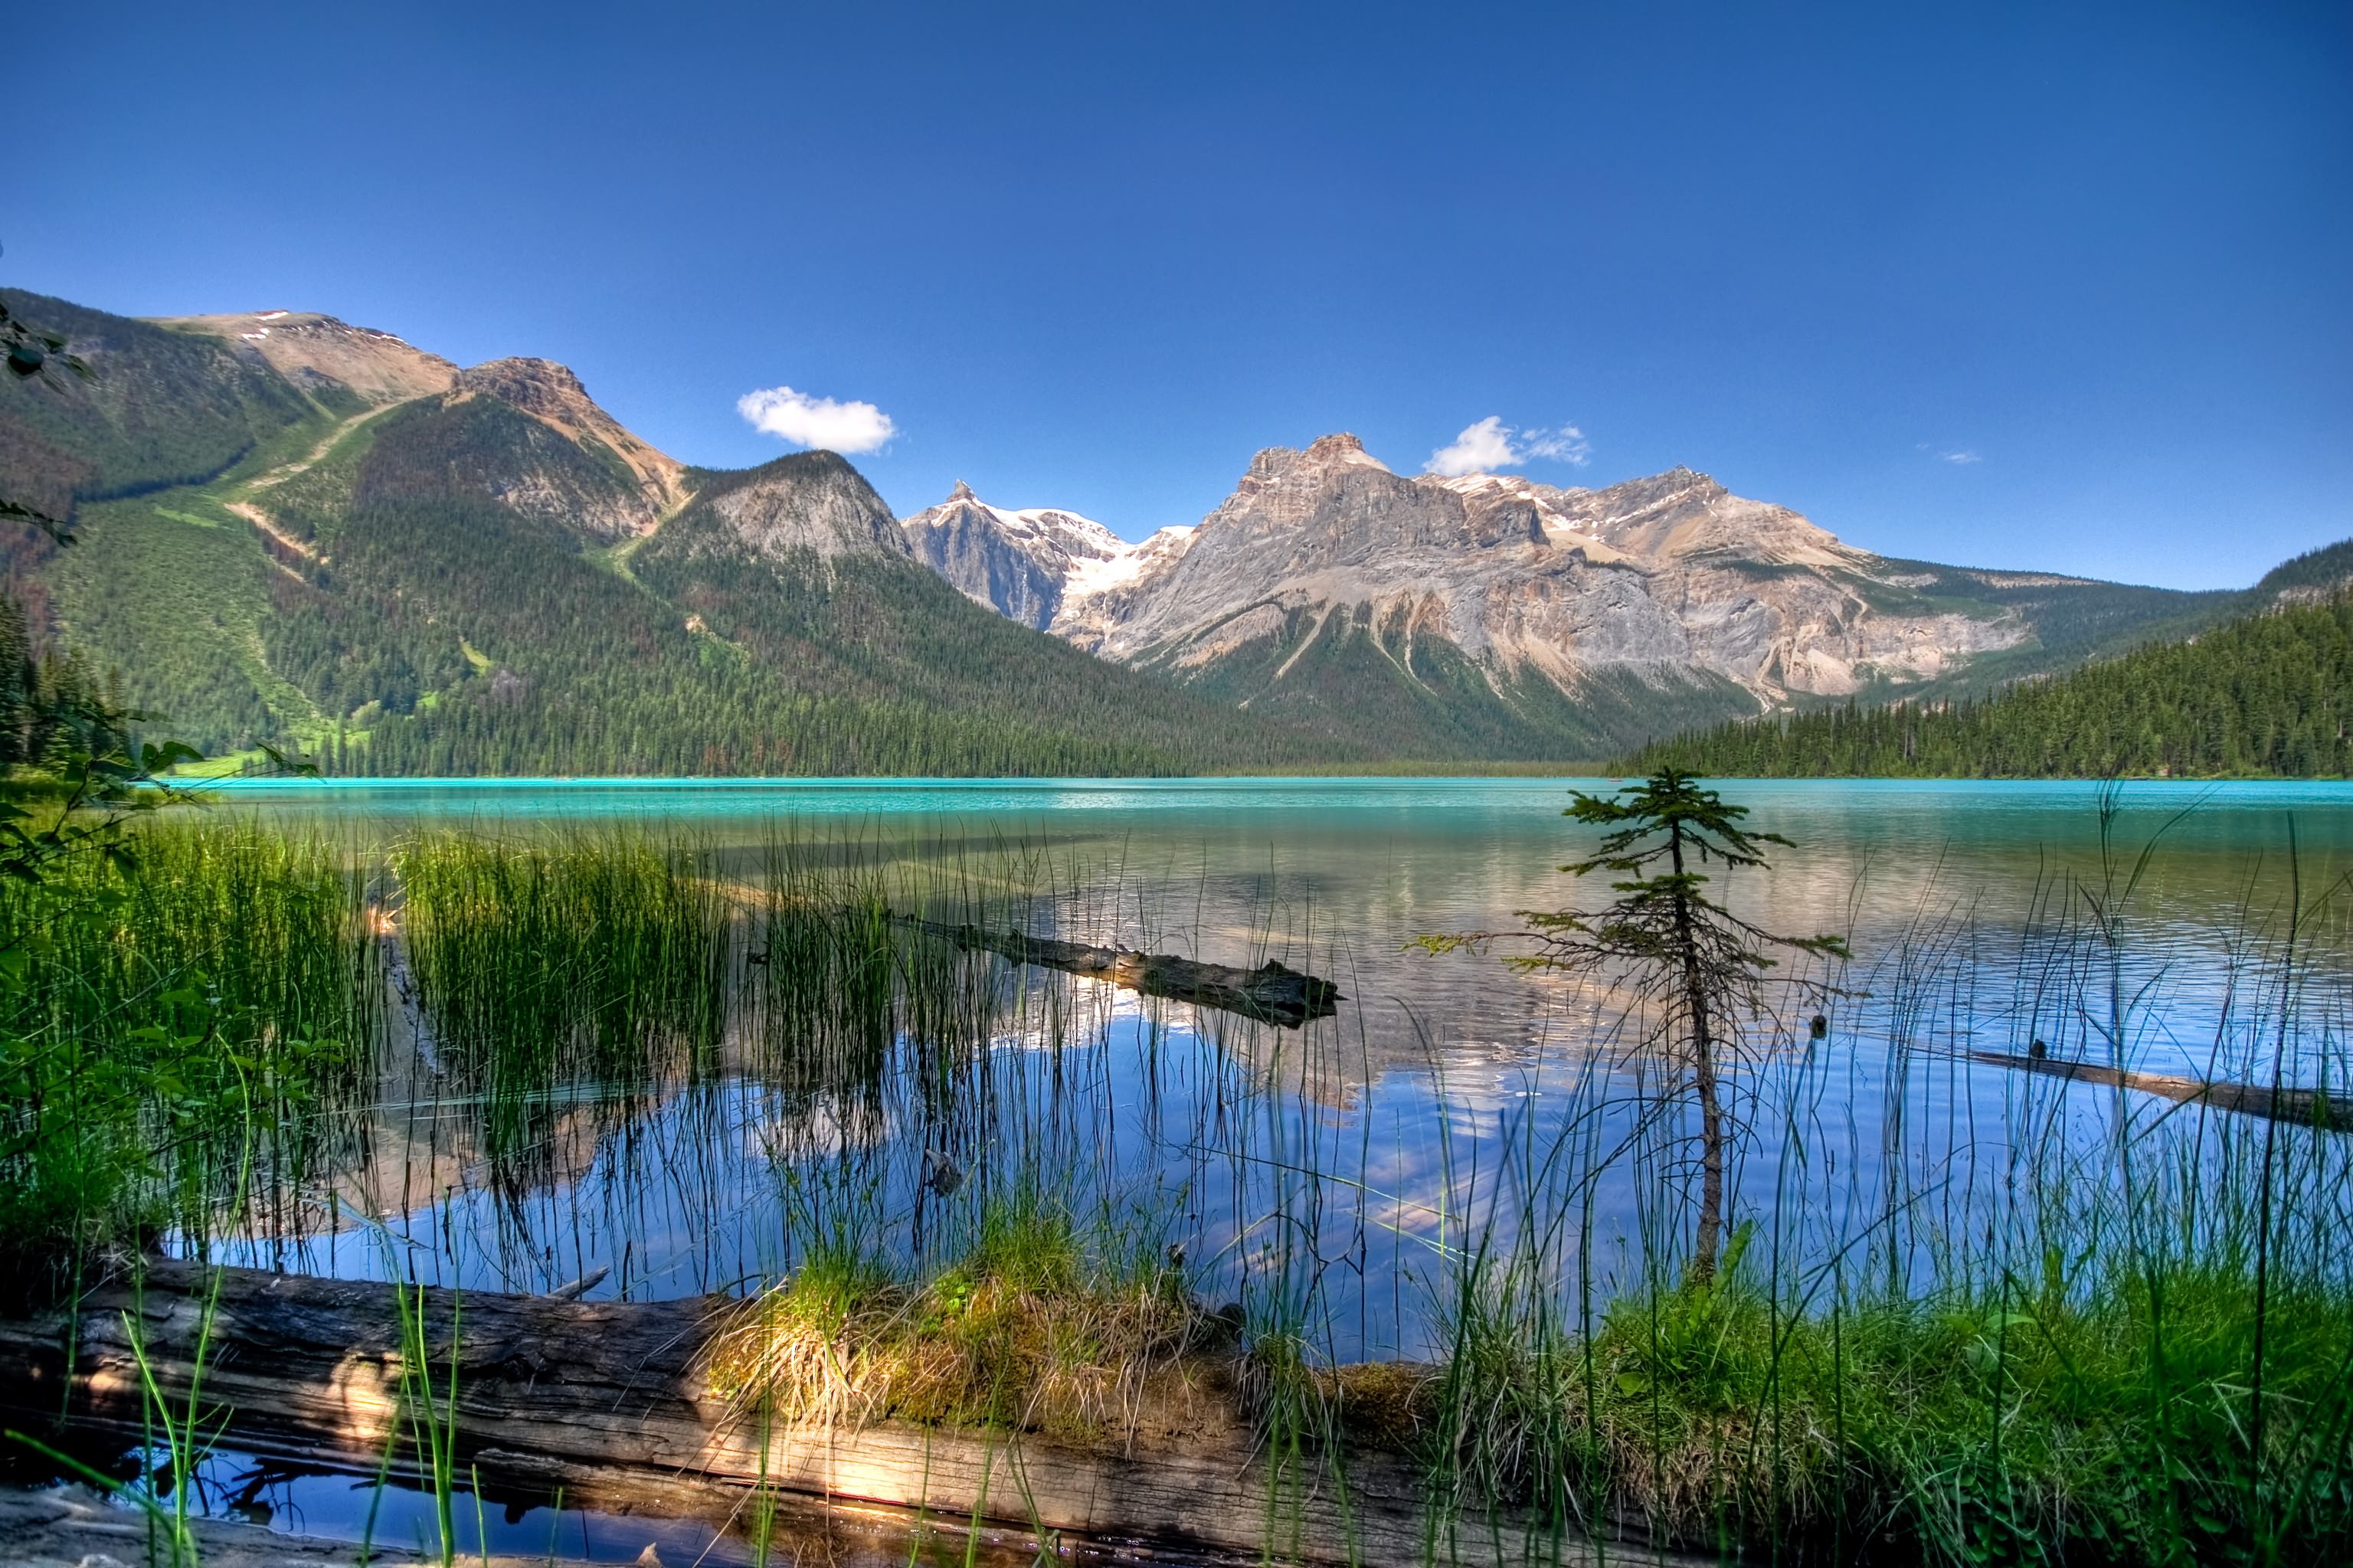 356552 descargar imagen tierra/naturaleza, lago, columbia británica, canadá, lagos: fondos de pantalla y protectores de pantalla gratis